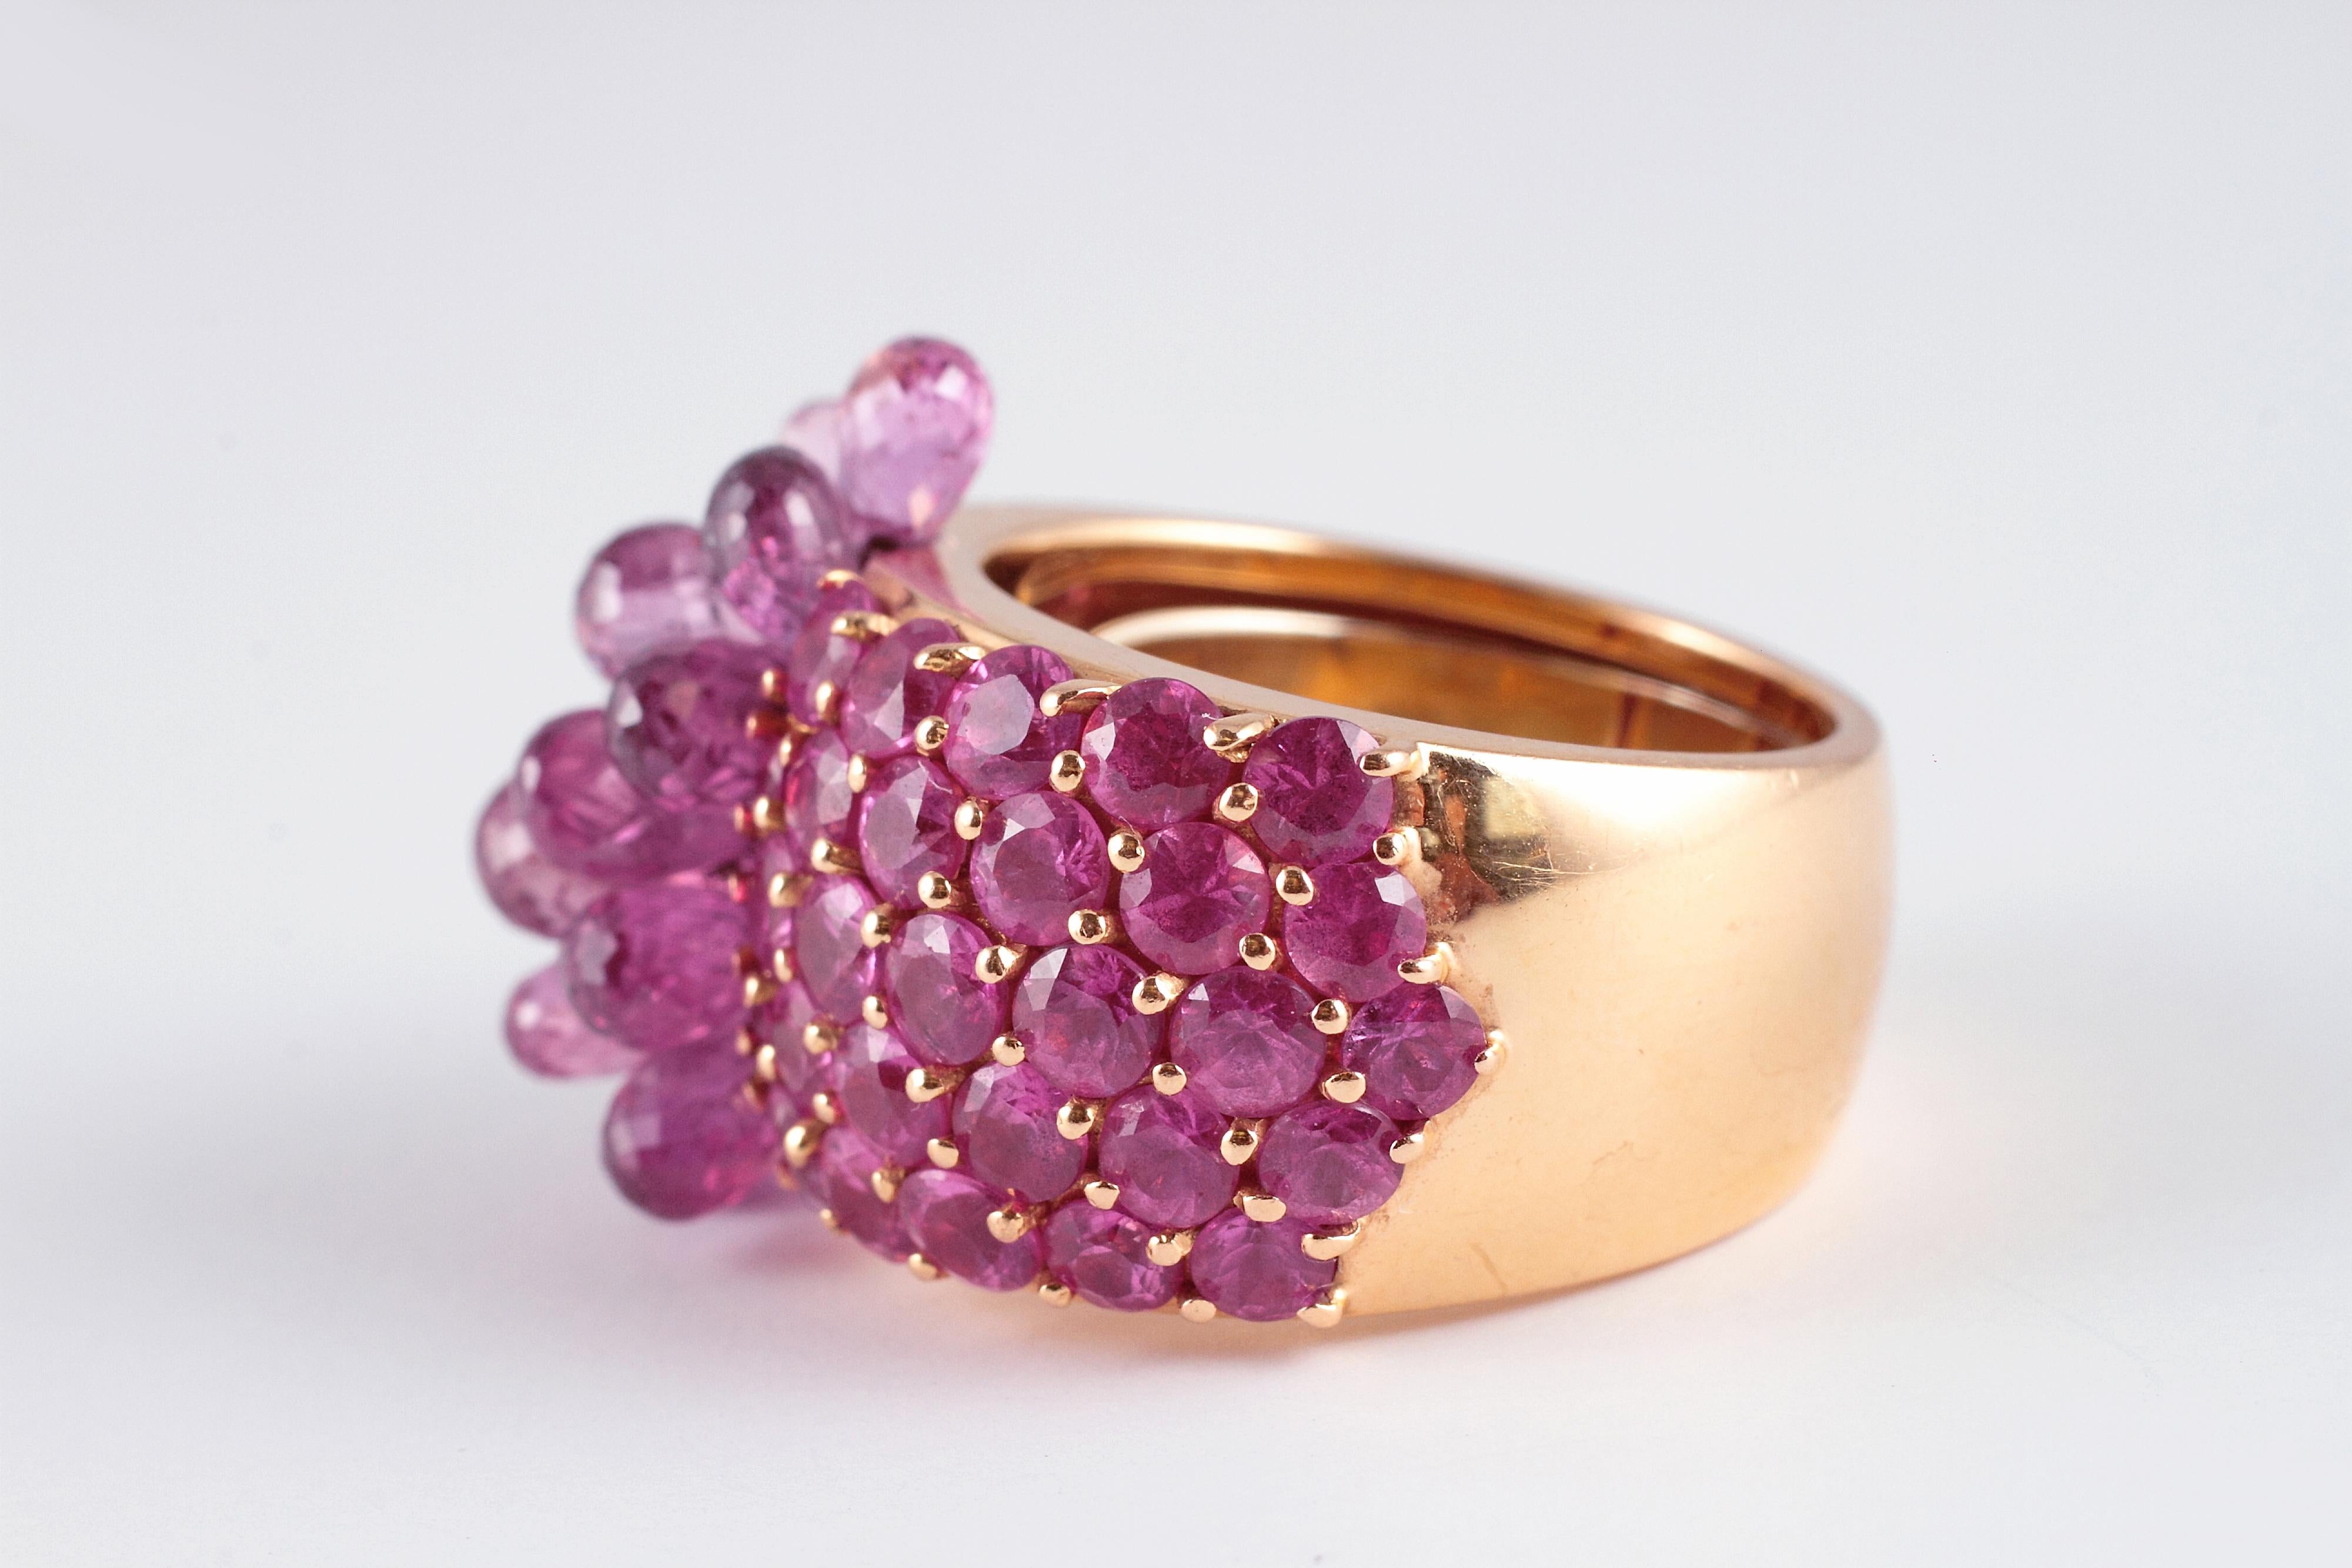 2 carat pink sapphire ring